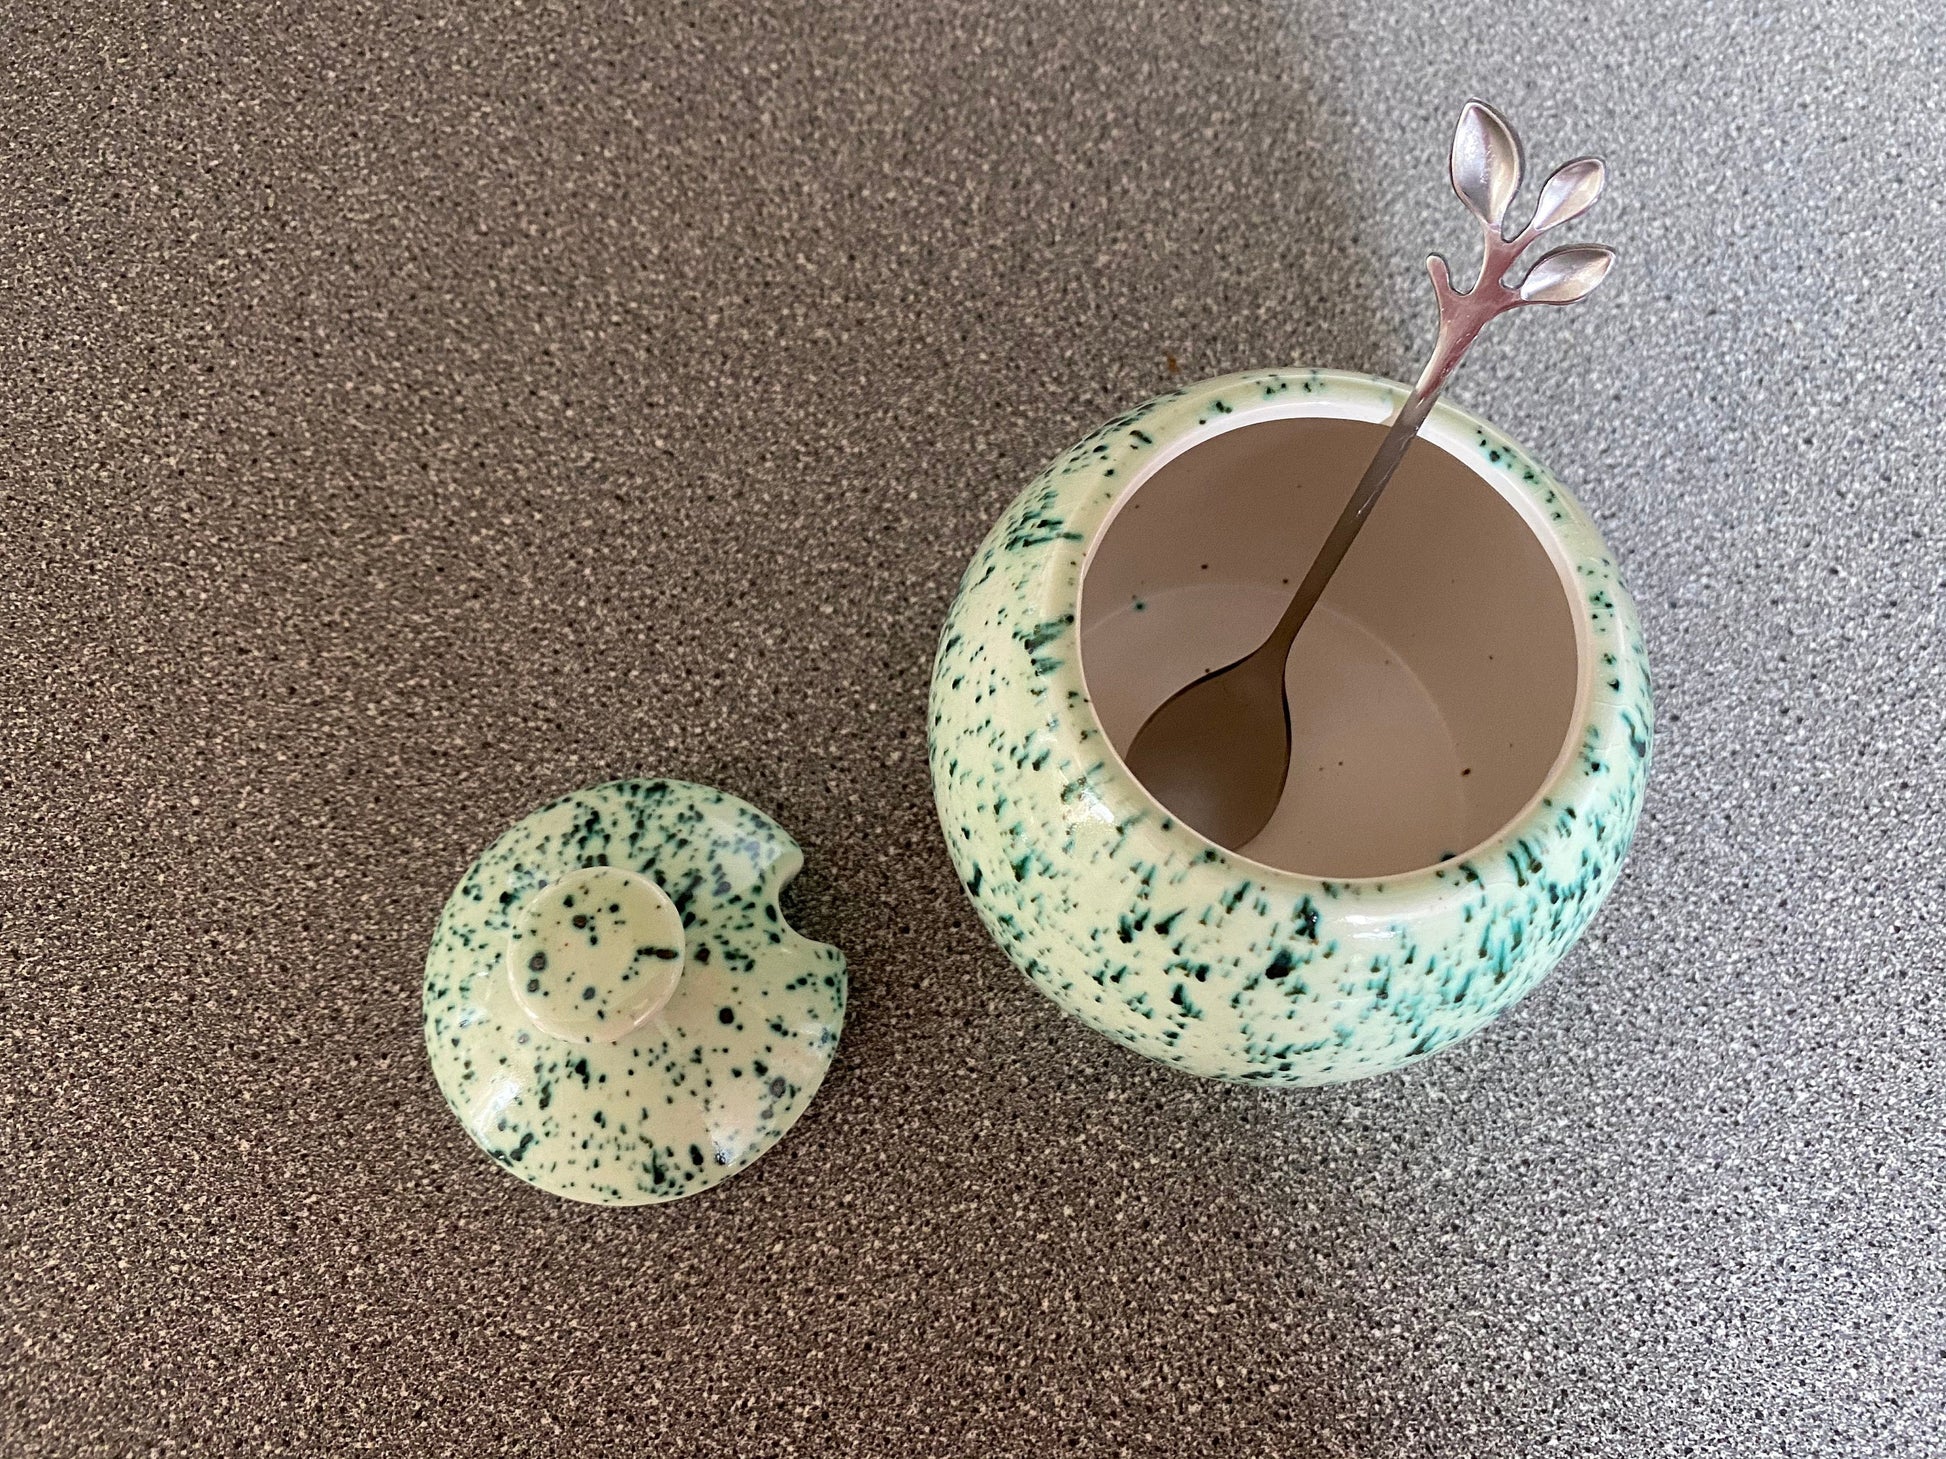 Sugar Bowl with Silver Leafy Spoon Speckled Green Glaze - PeterBowenArt